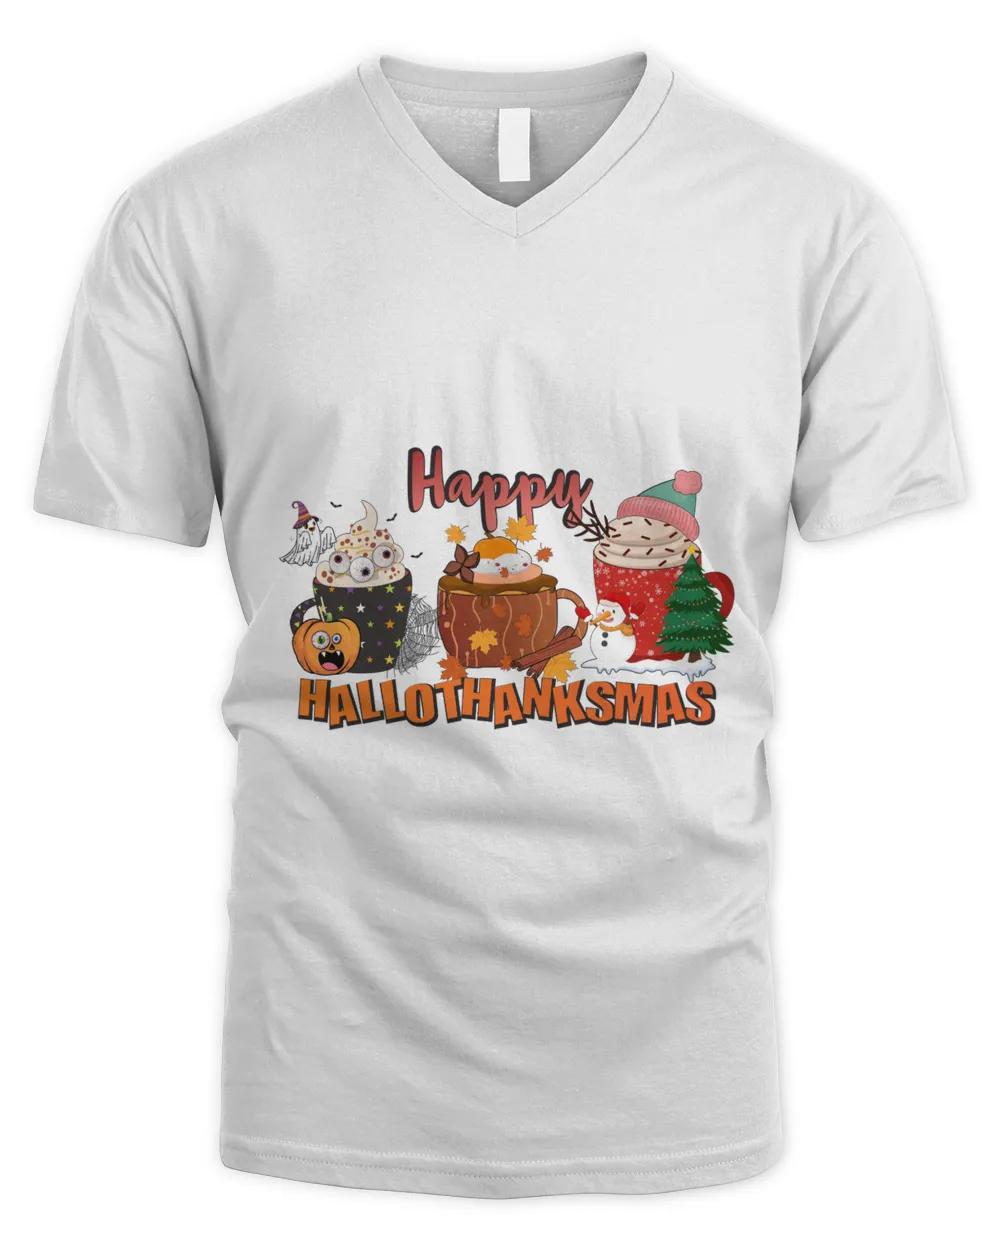 Happy Halloween shirt, Happy Hallothanksmas shirt, Christmas Coffee, Halloween Coffee, Fall Coffee (61)